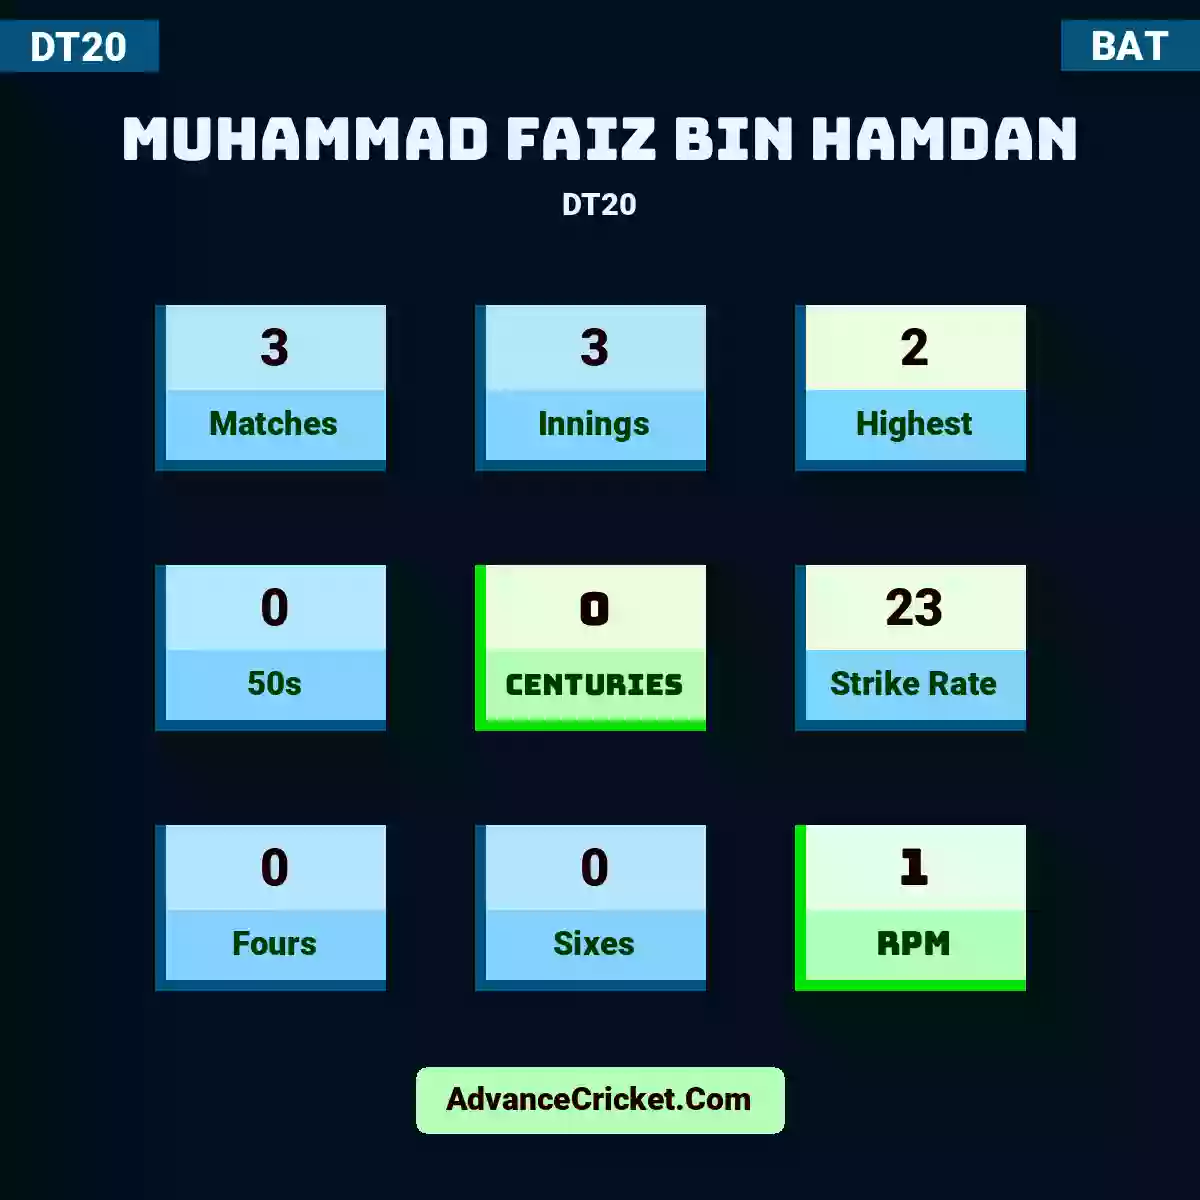 Muhammad Faiz Bin Hamdan DT20 , Muhammad Faiz Bin Hamdan played 3 matches, scored 2 runs as highest, 0 half-centuries, and 0 centuries, with a strike rate of 23. M.Faiz.Bin.Hamdan hit 0 fours and 0 sixes, with an RPM of 1.